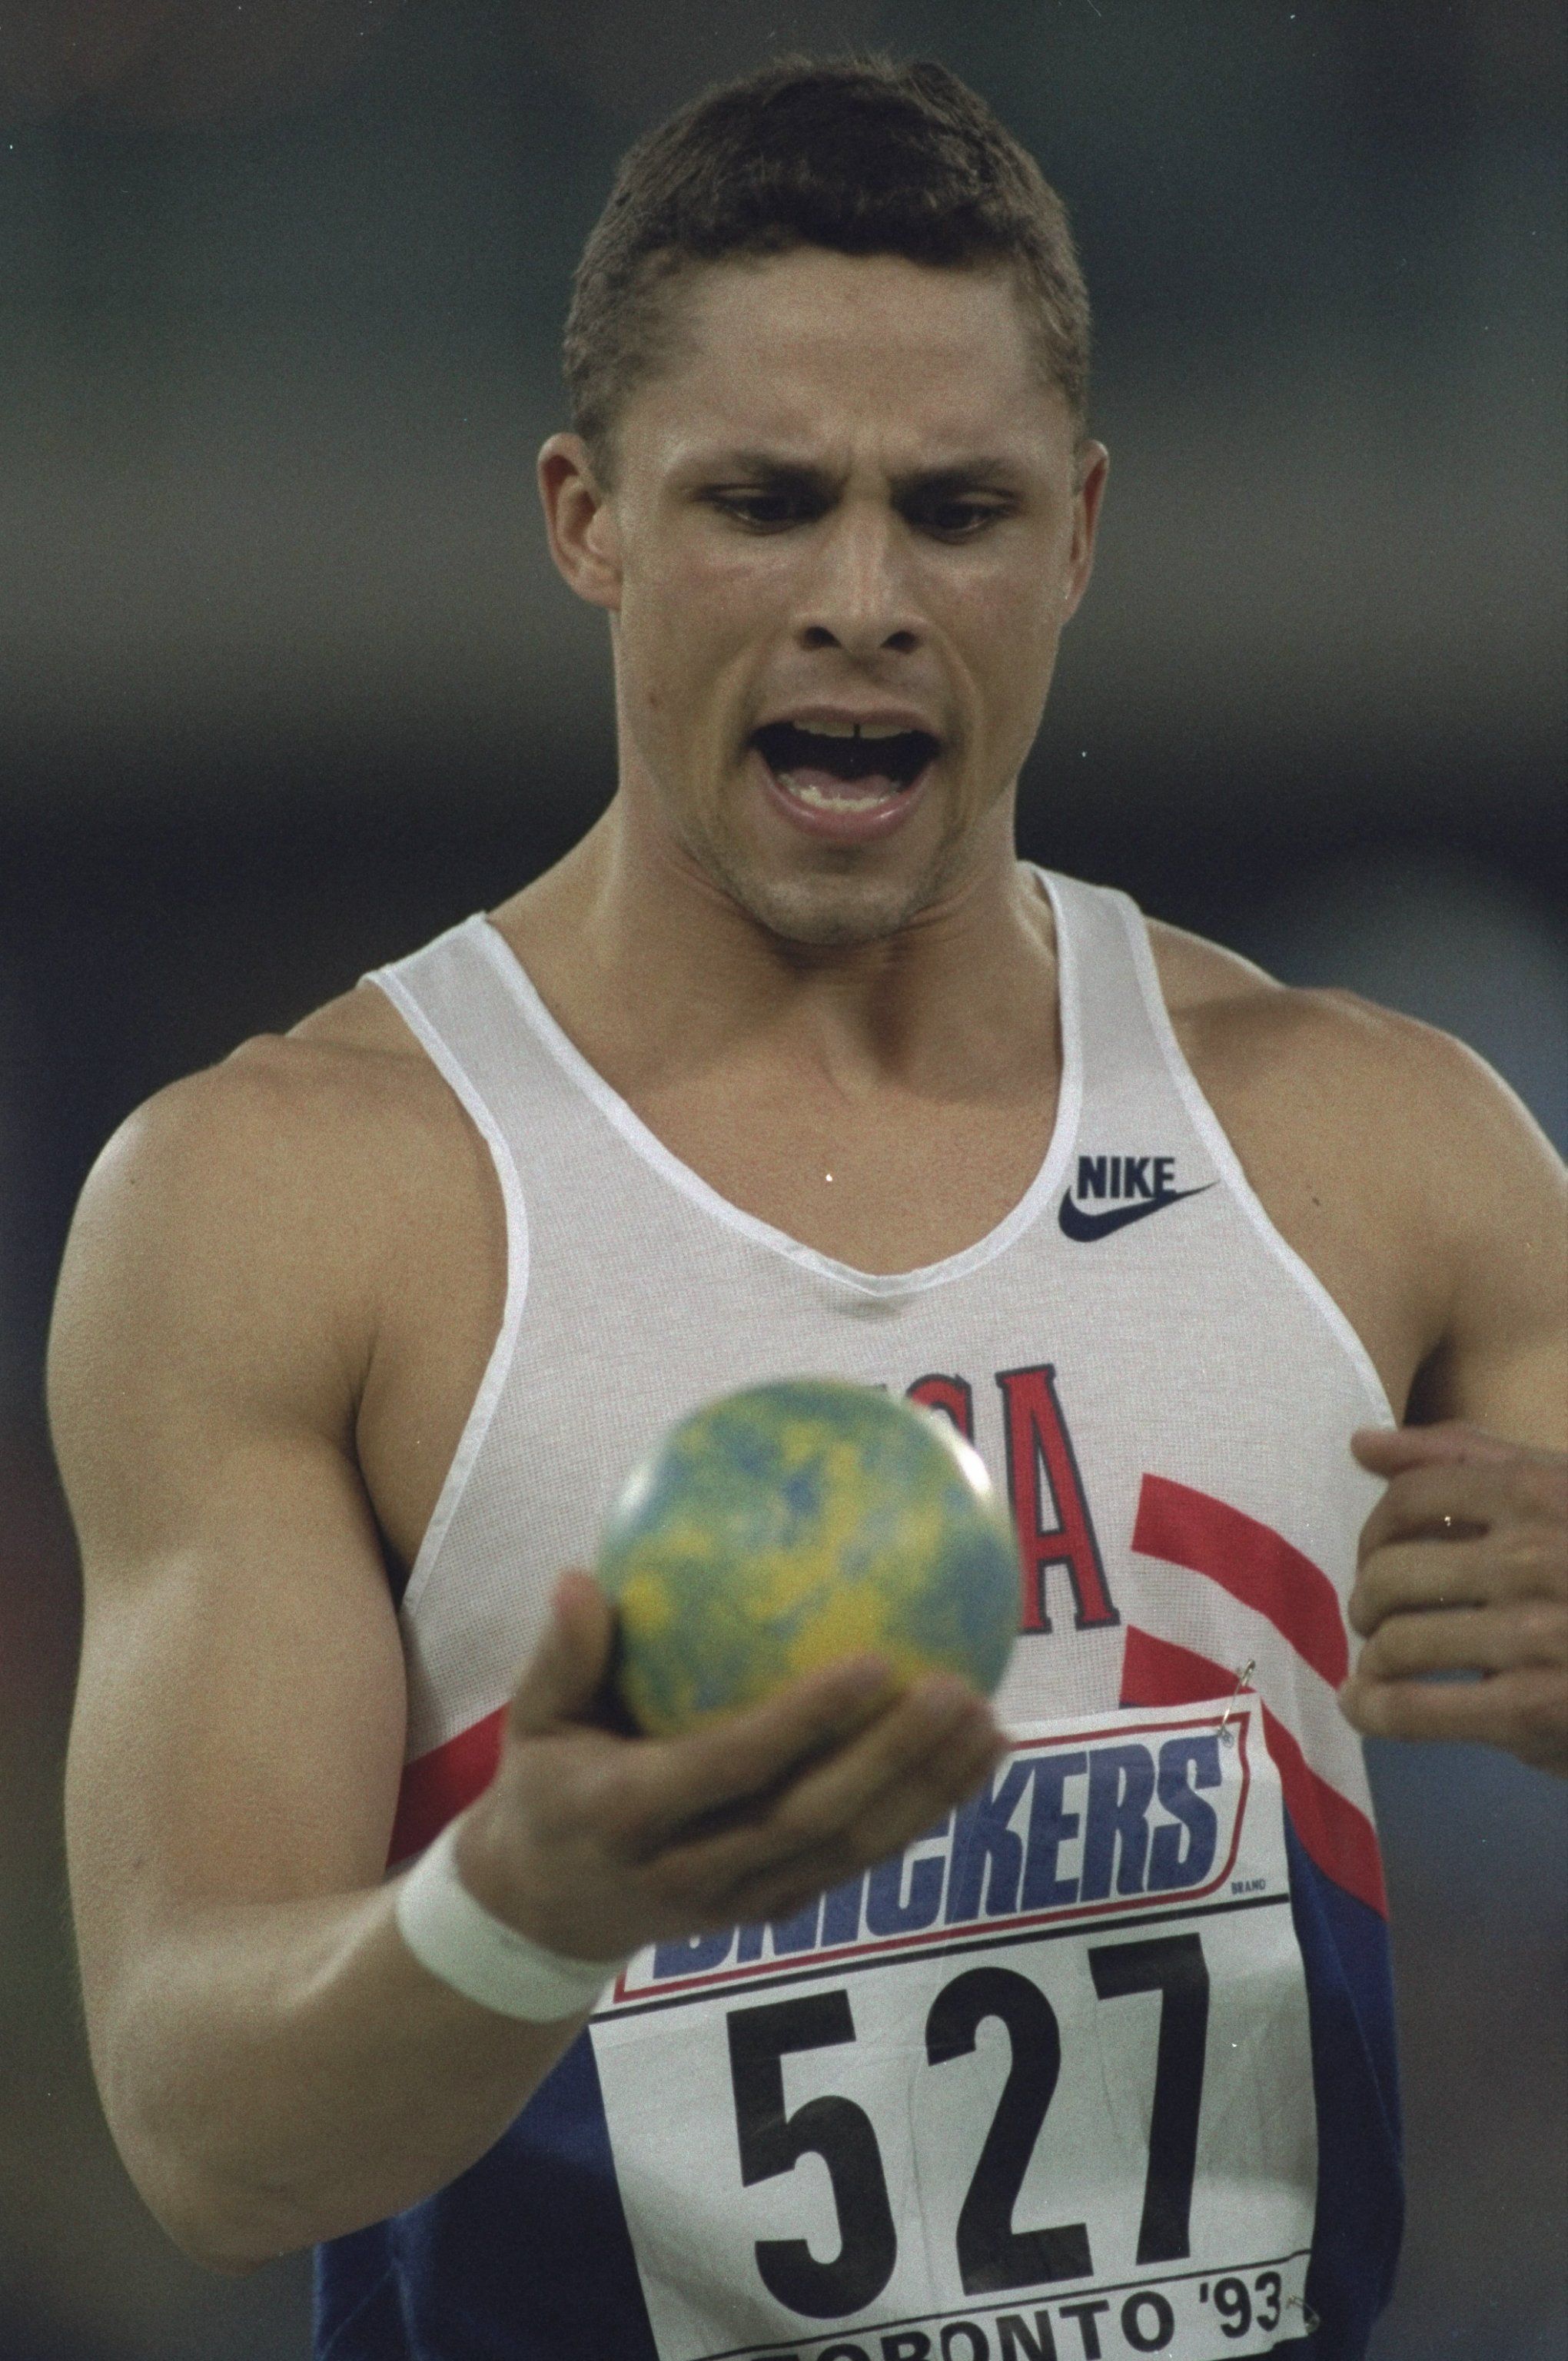 Dan O'Brien in the heptathlon shot put at the 1993 World Indoor Championships